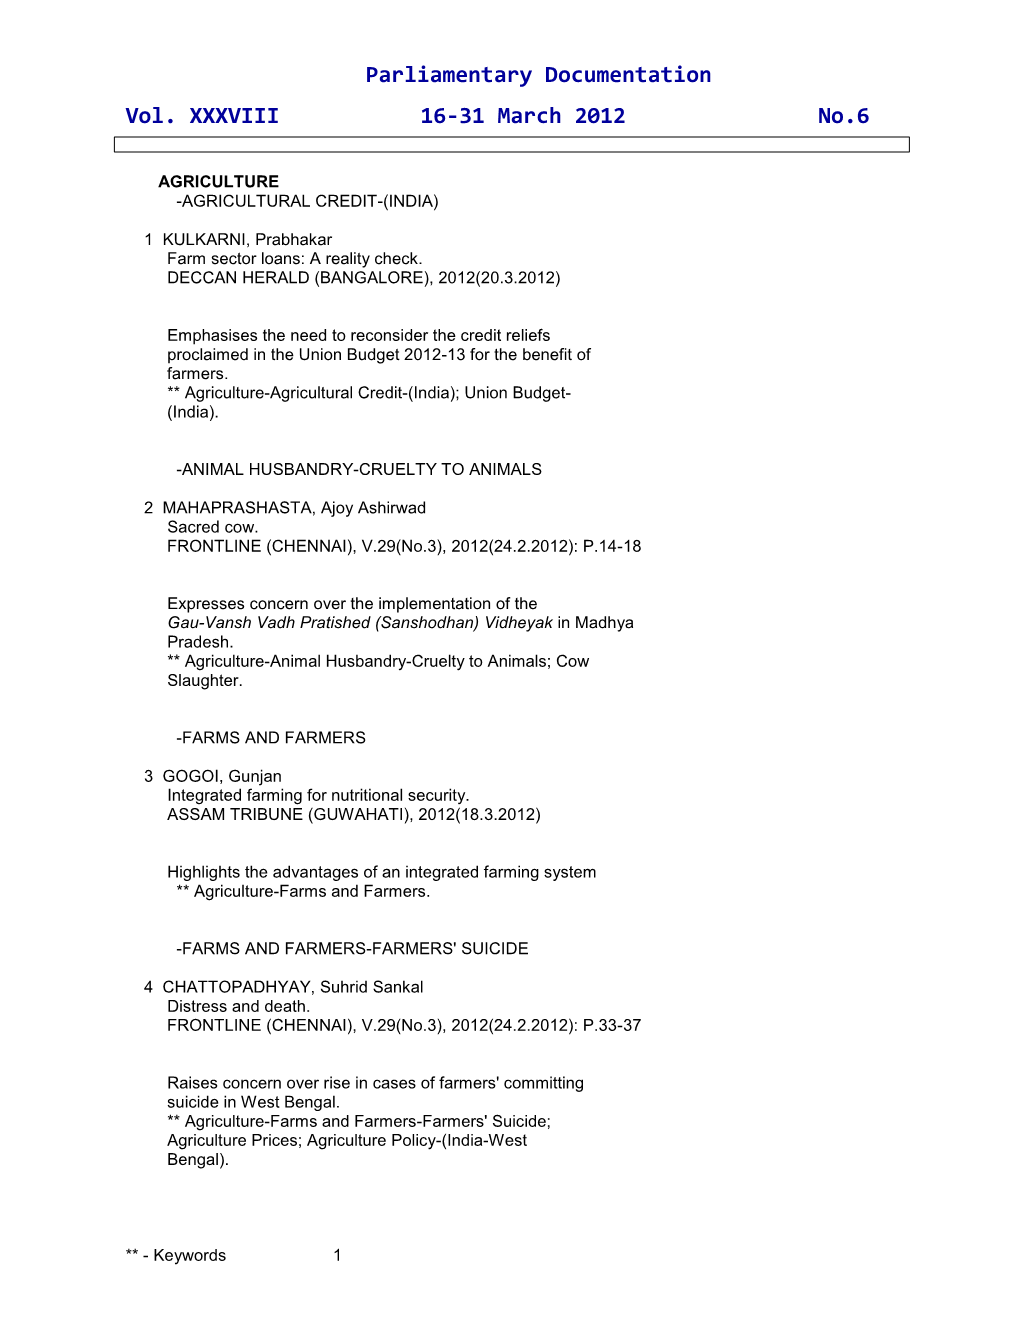 Parliamentary Documentation Vol. XXXVIII 16-31 March 2012 No.6